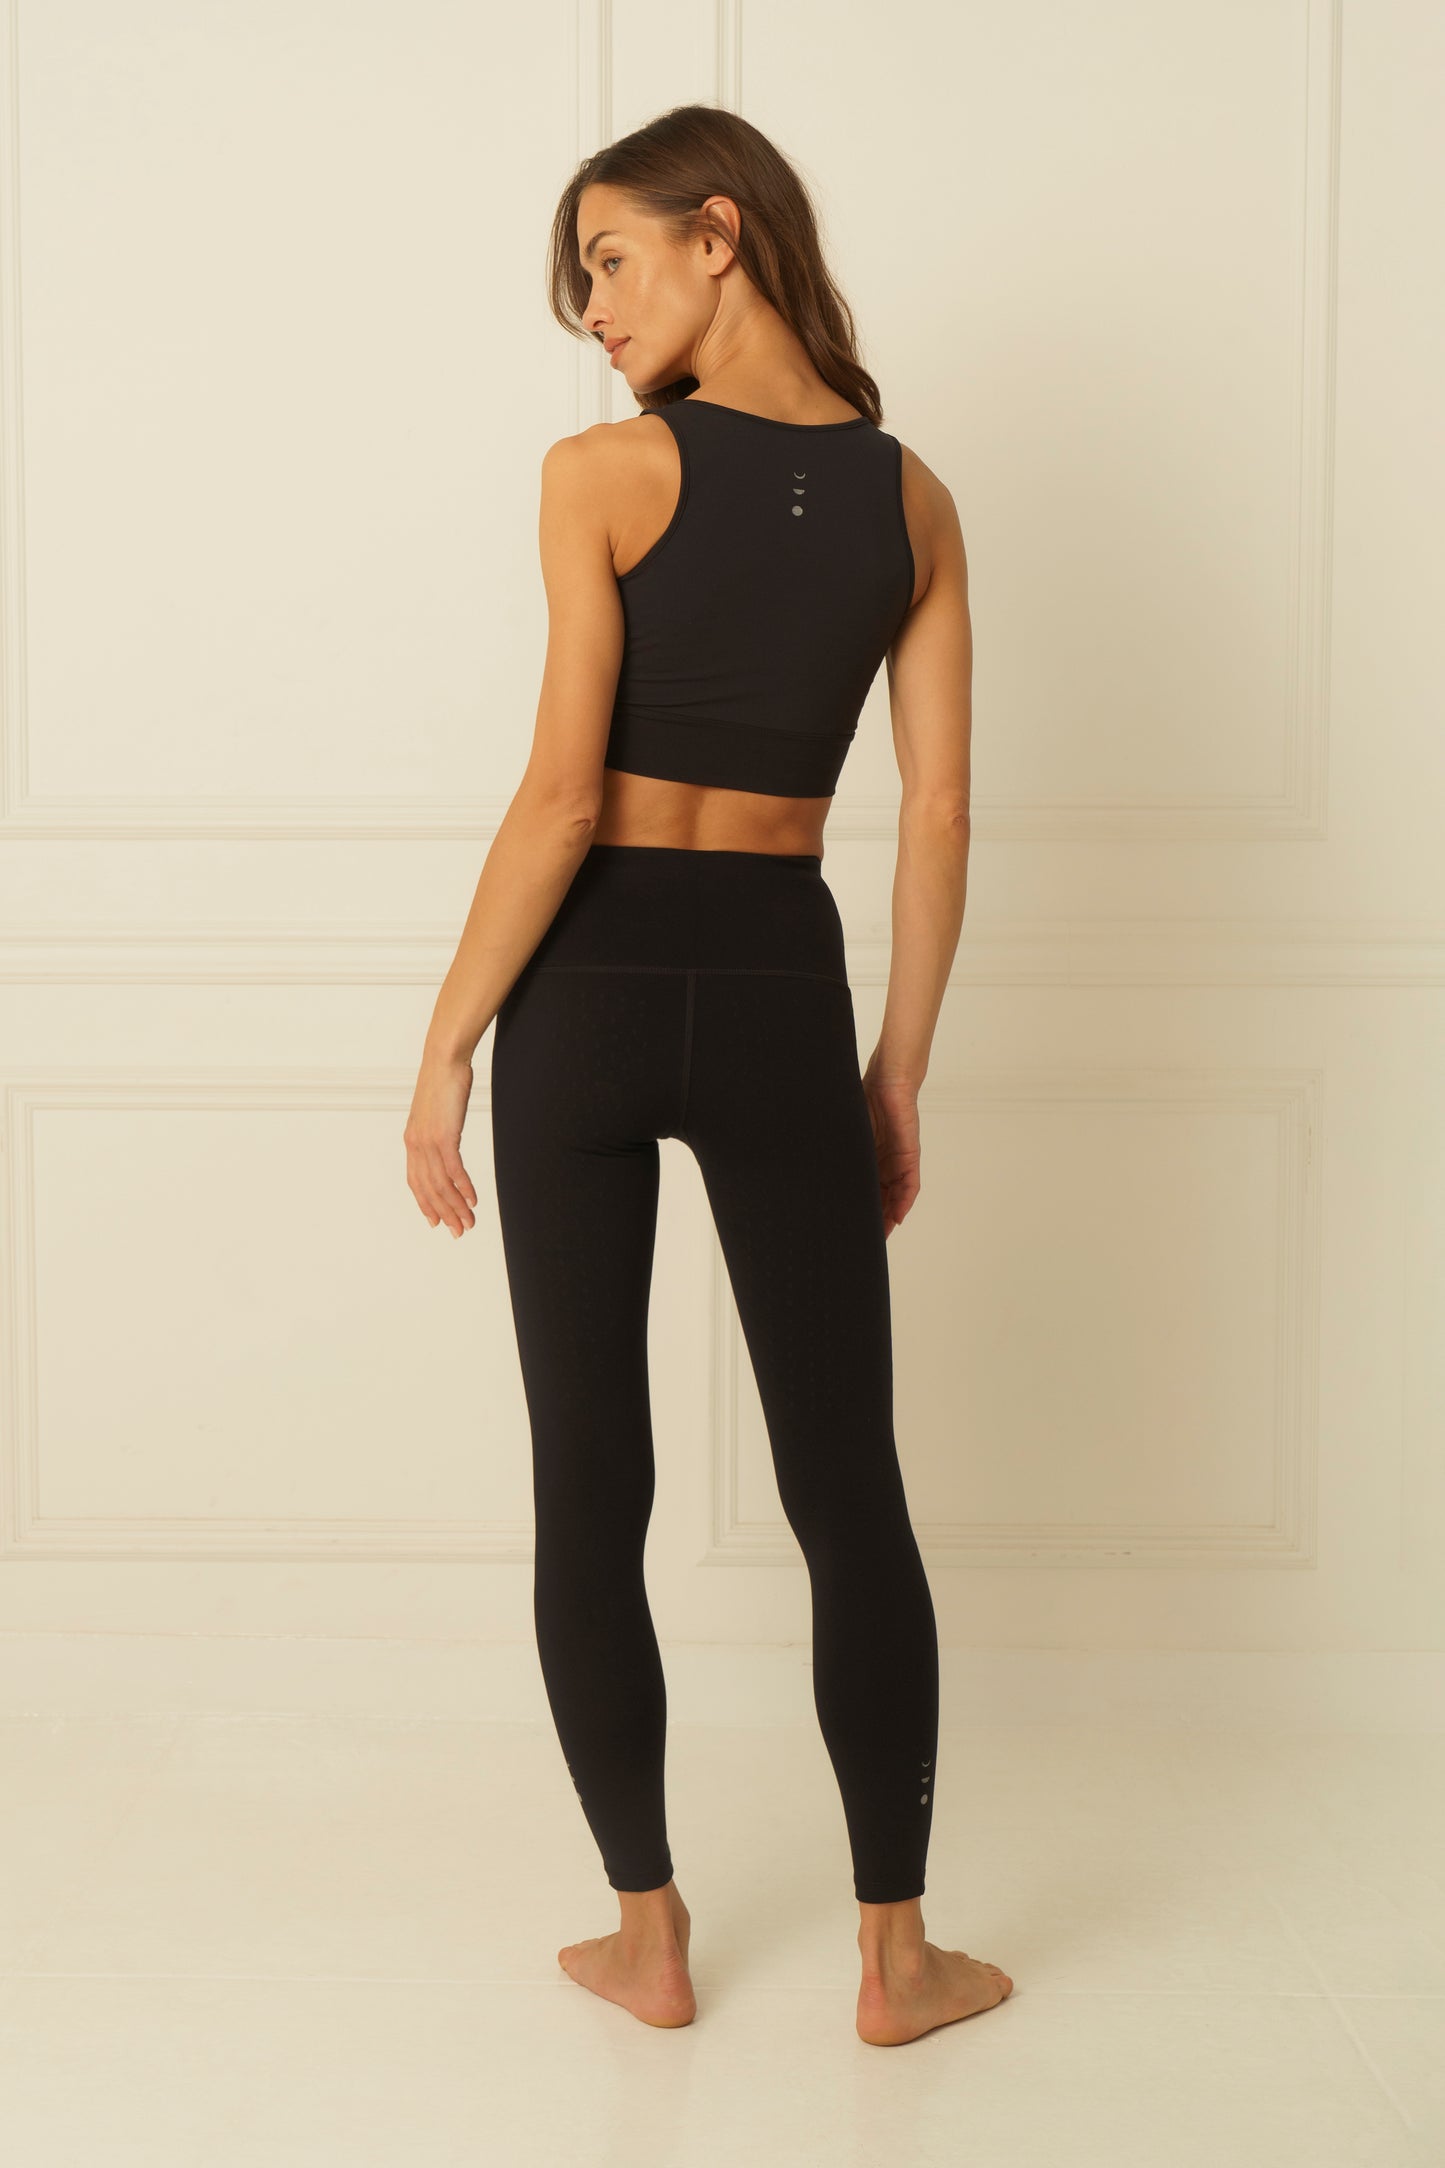 Gym/workout pants. Capri length. Size 8/10 medium. - Depop